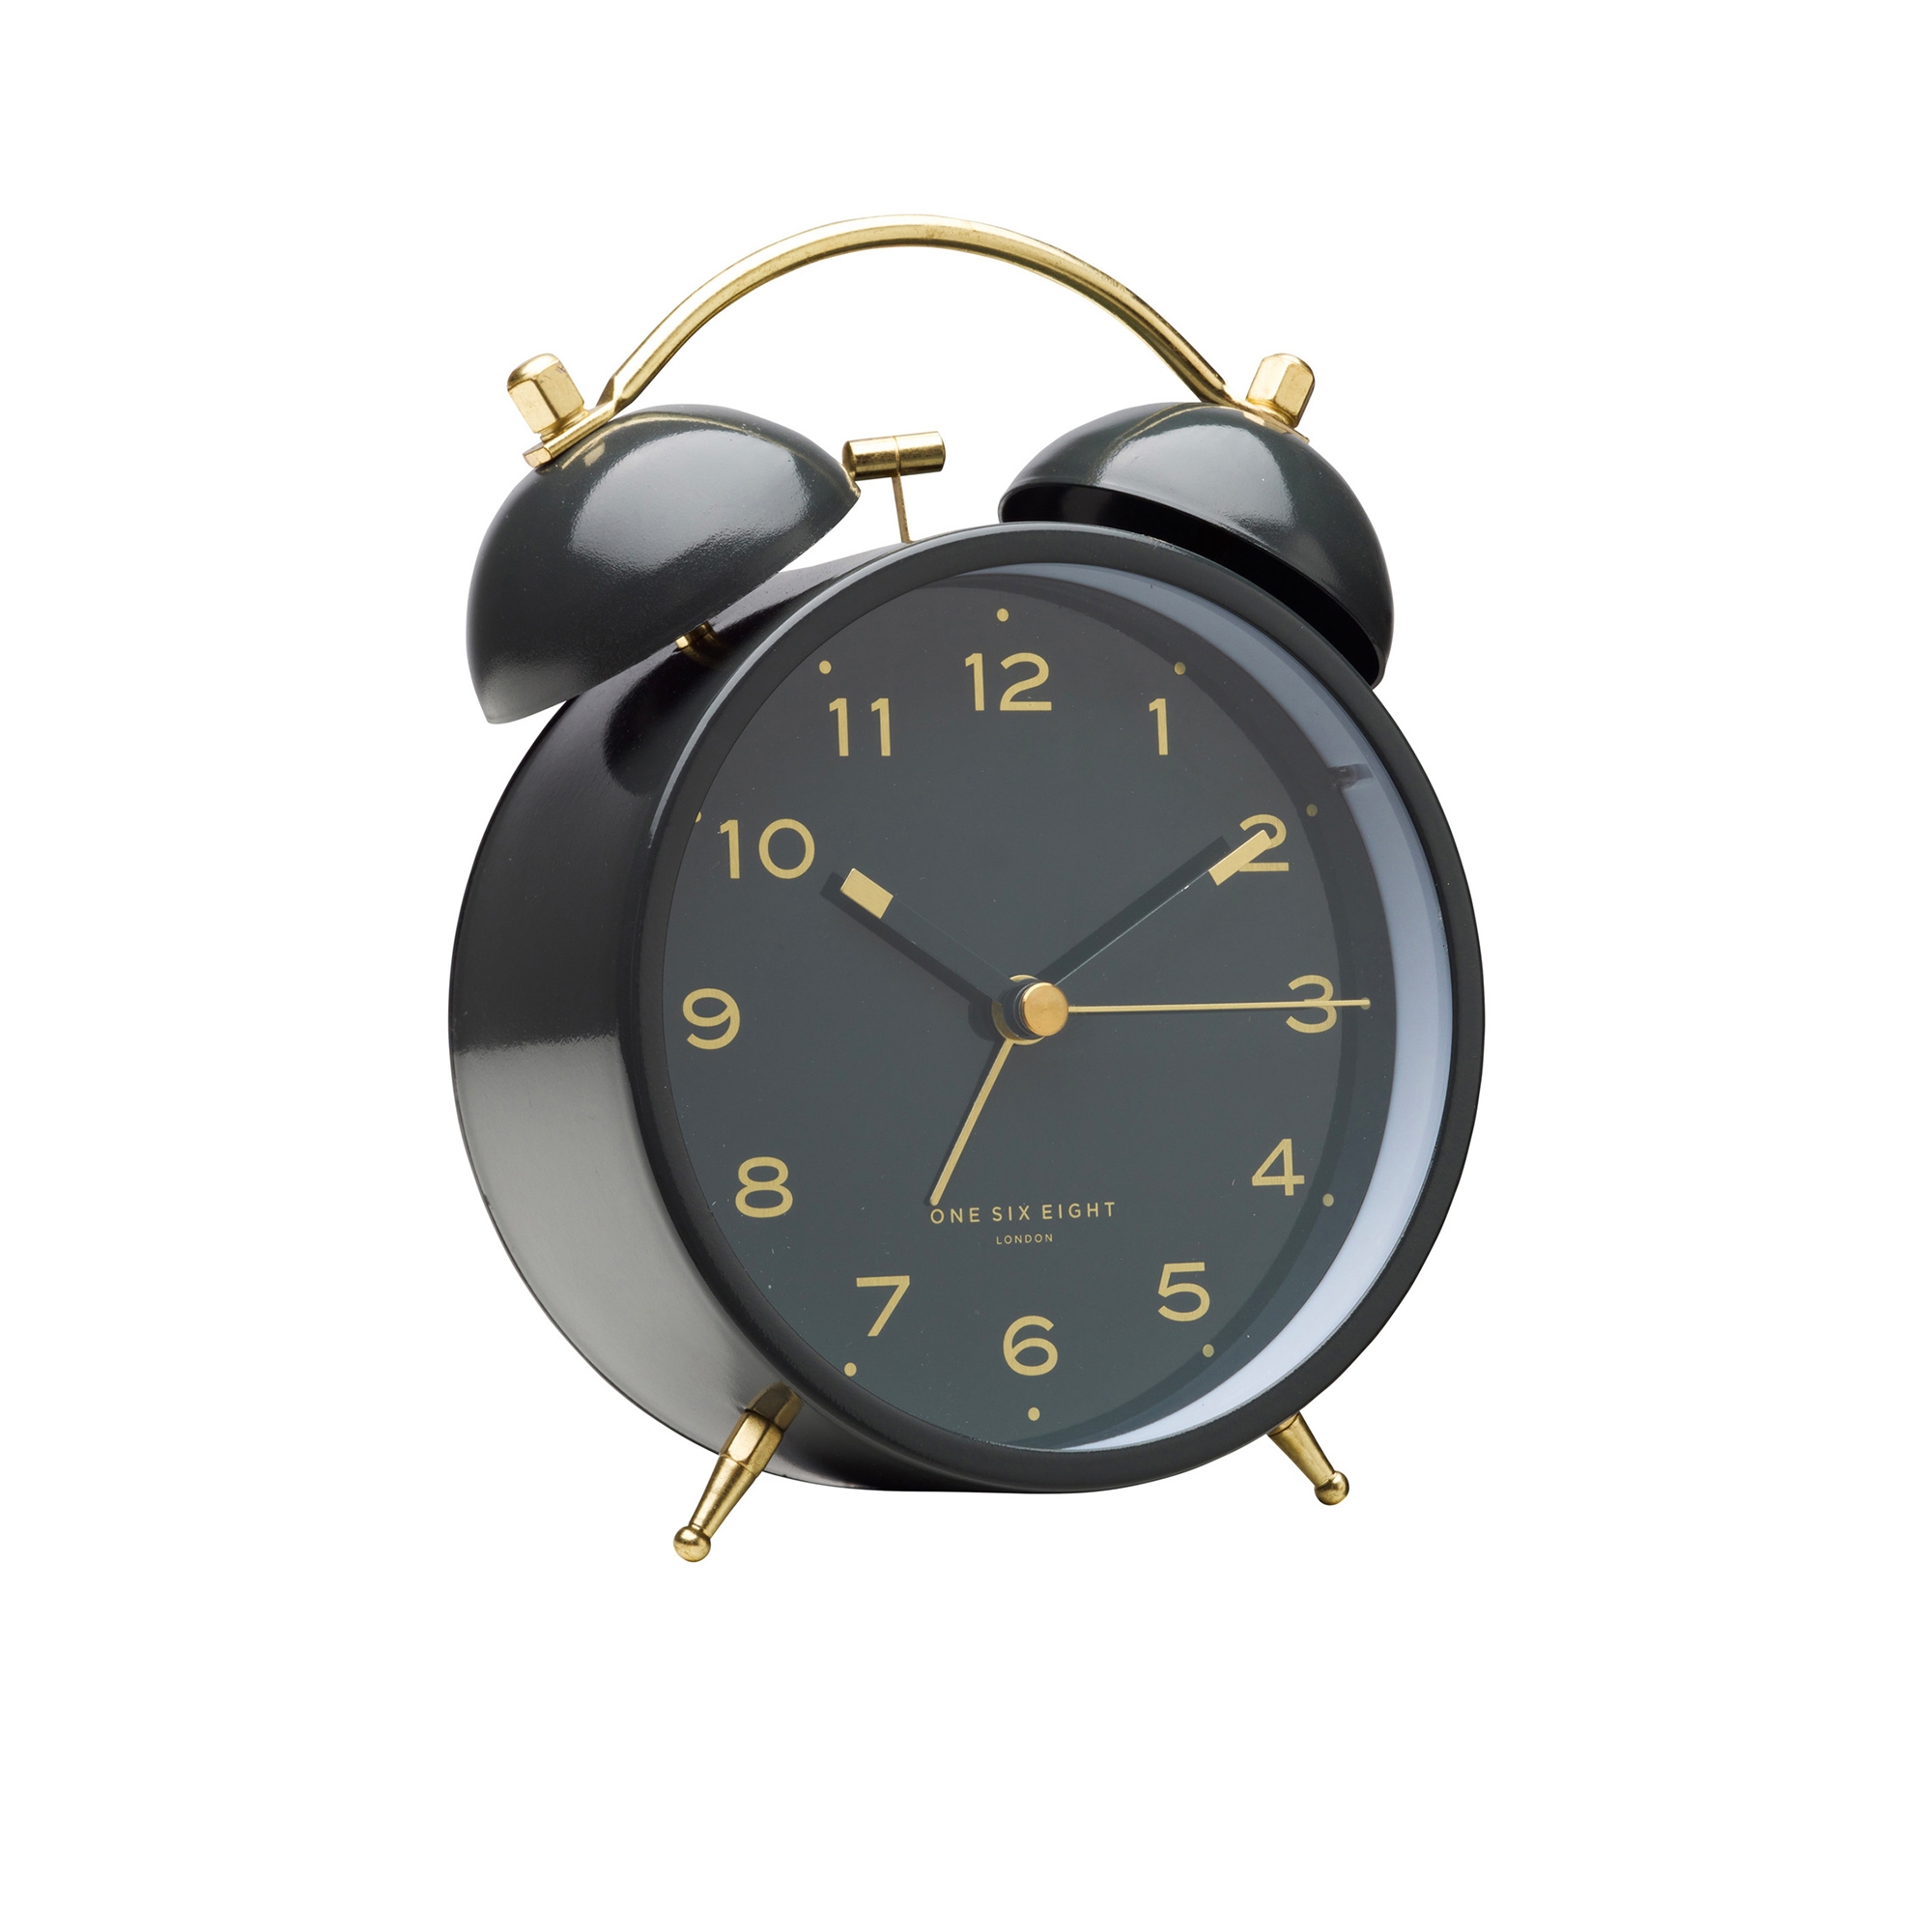 One Six Eight London Elsa Alarm Clock Black/Dark Grey Image 2